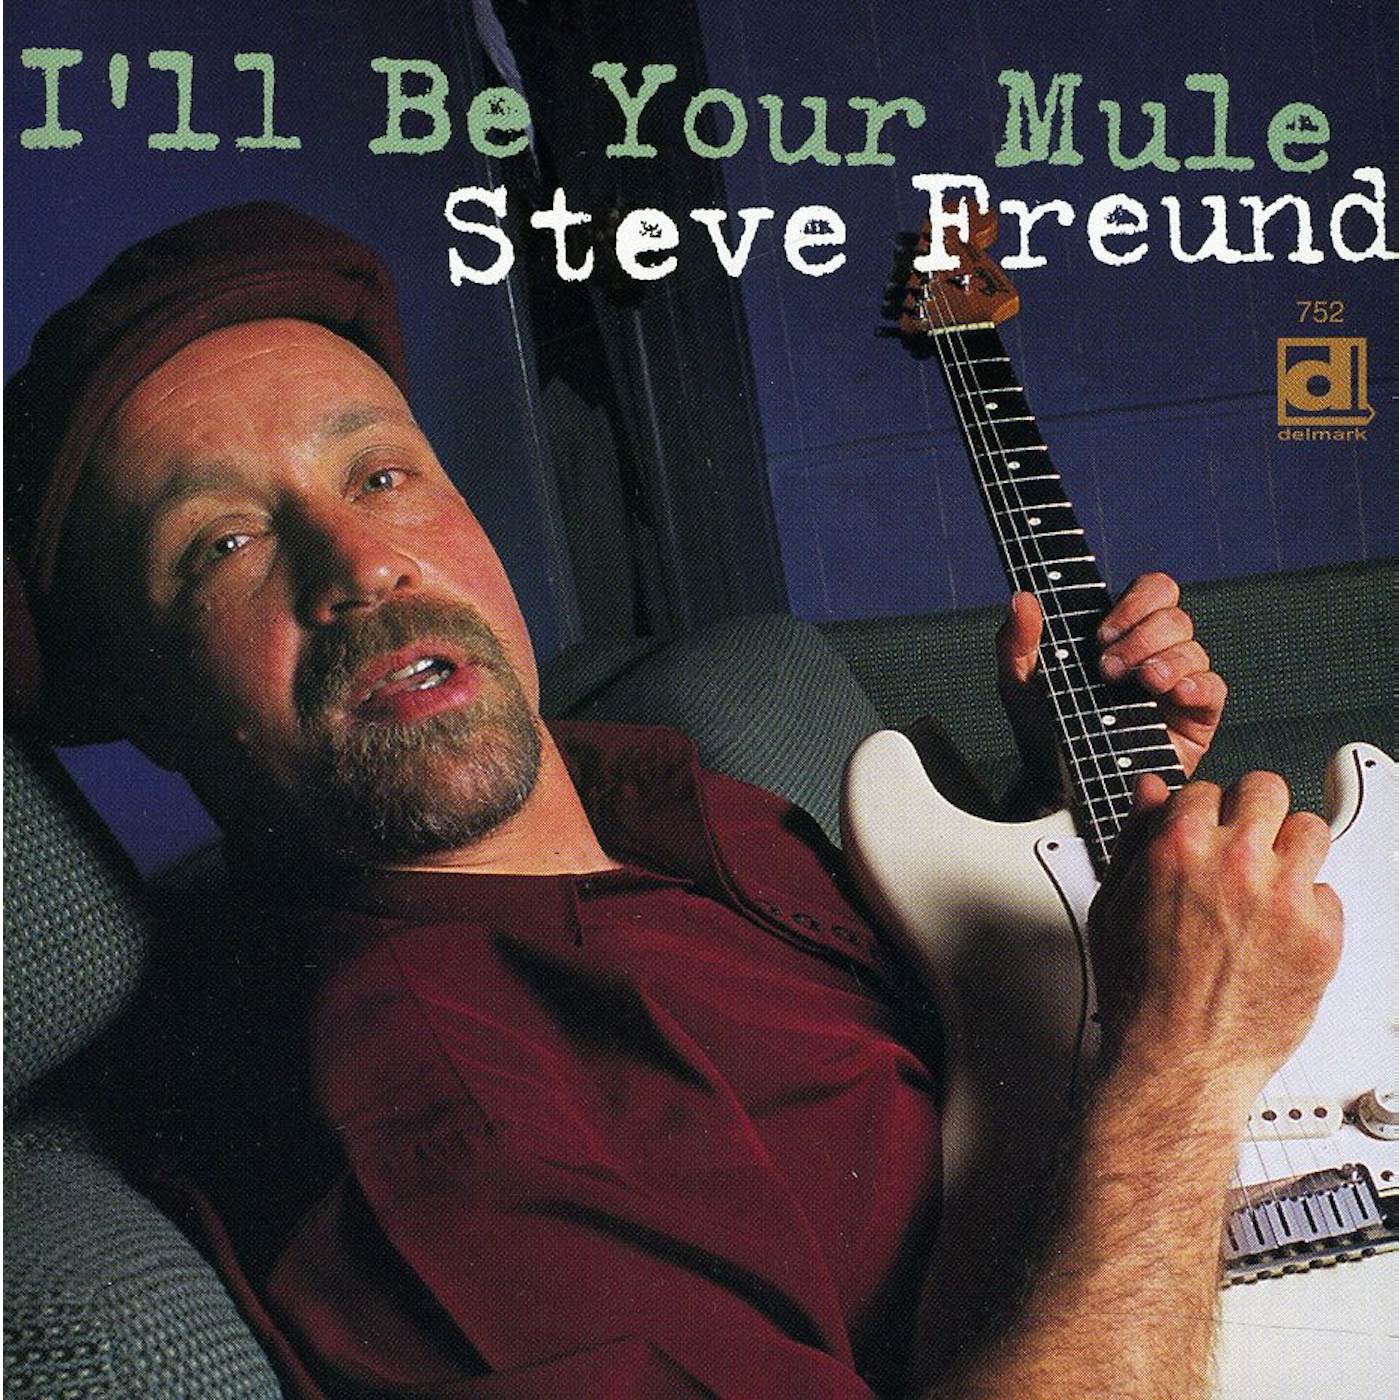 Steve Freund I'LL BE YOUR MULE CD